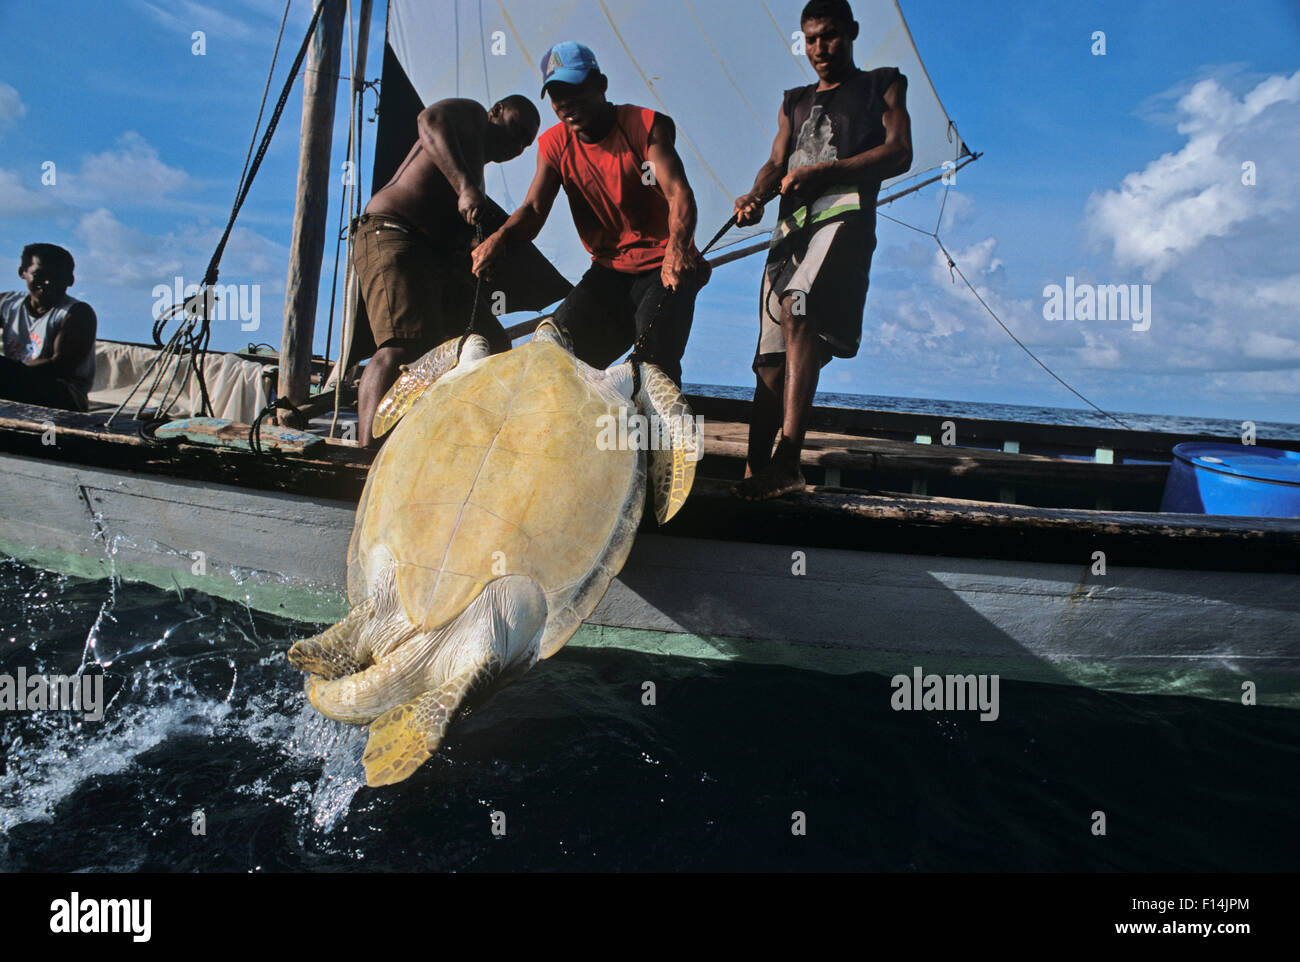 Miskito Indian fishermen hauling in endangered Green turtle (Chelonia mydas) catch, Puerto Cabezas, Nicaragua, Caribbean Sea. Stock Photo